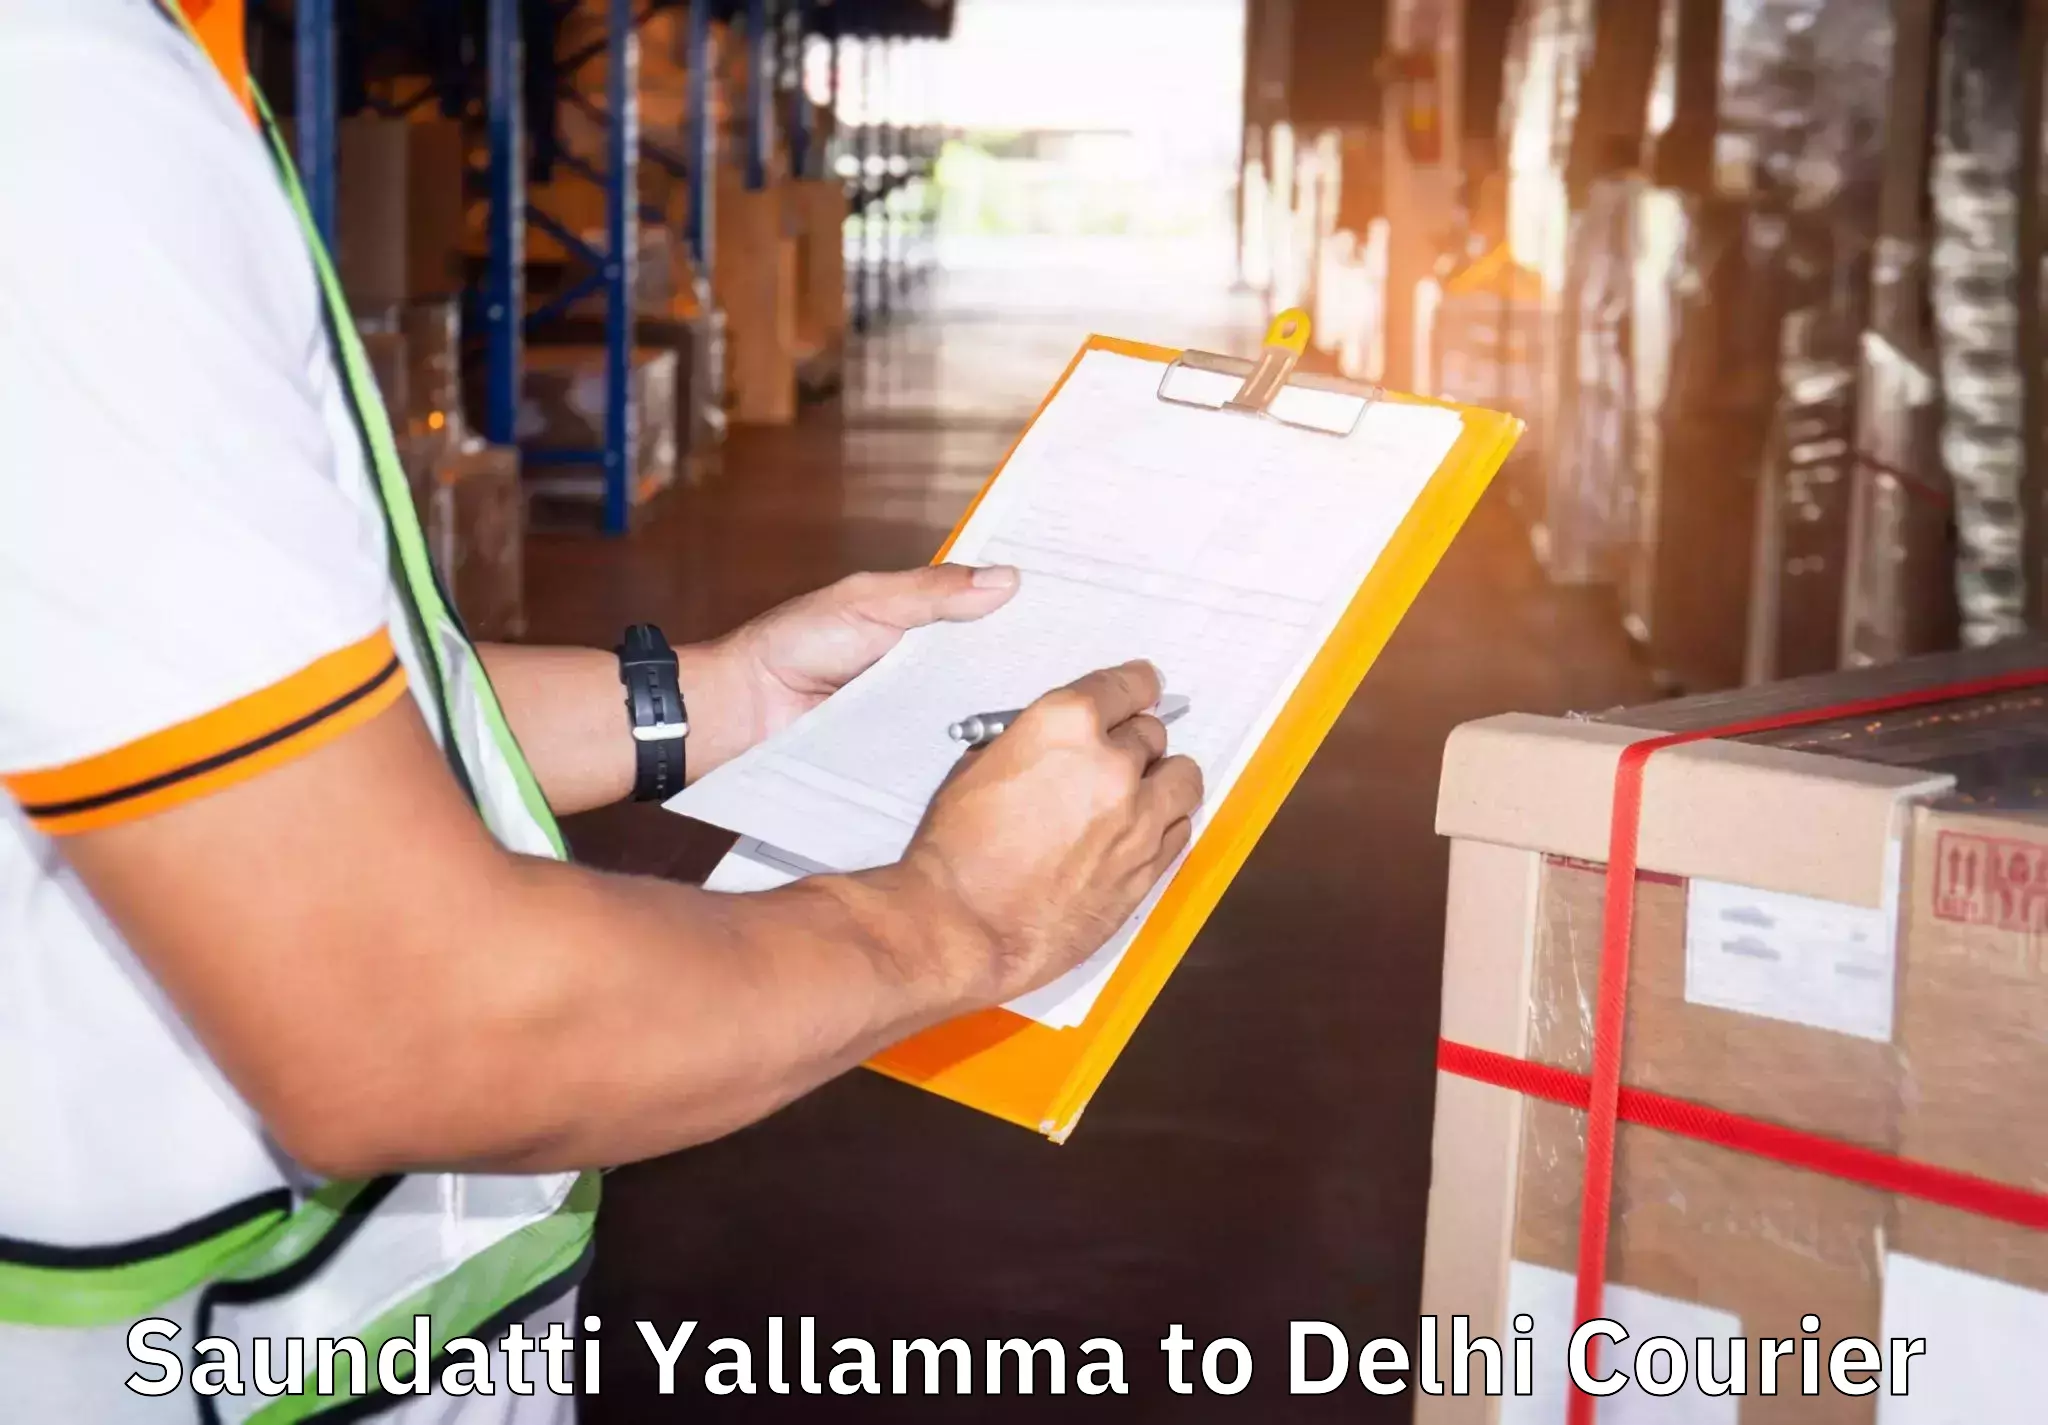 Quality moving company Saundatti Yallamma to University of Delhi